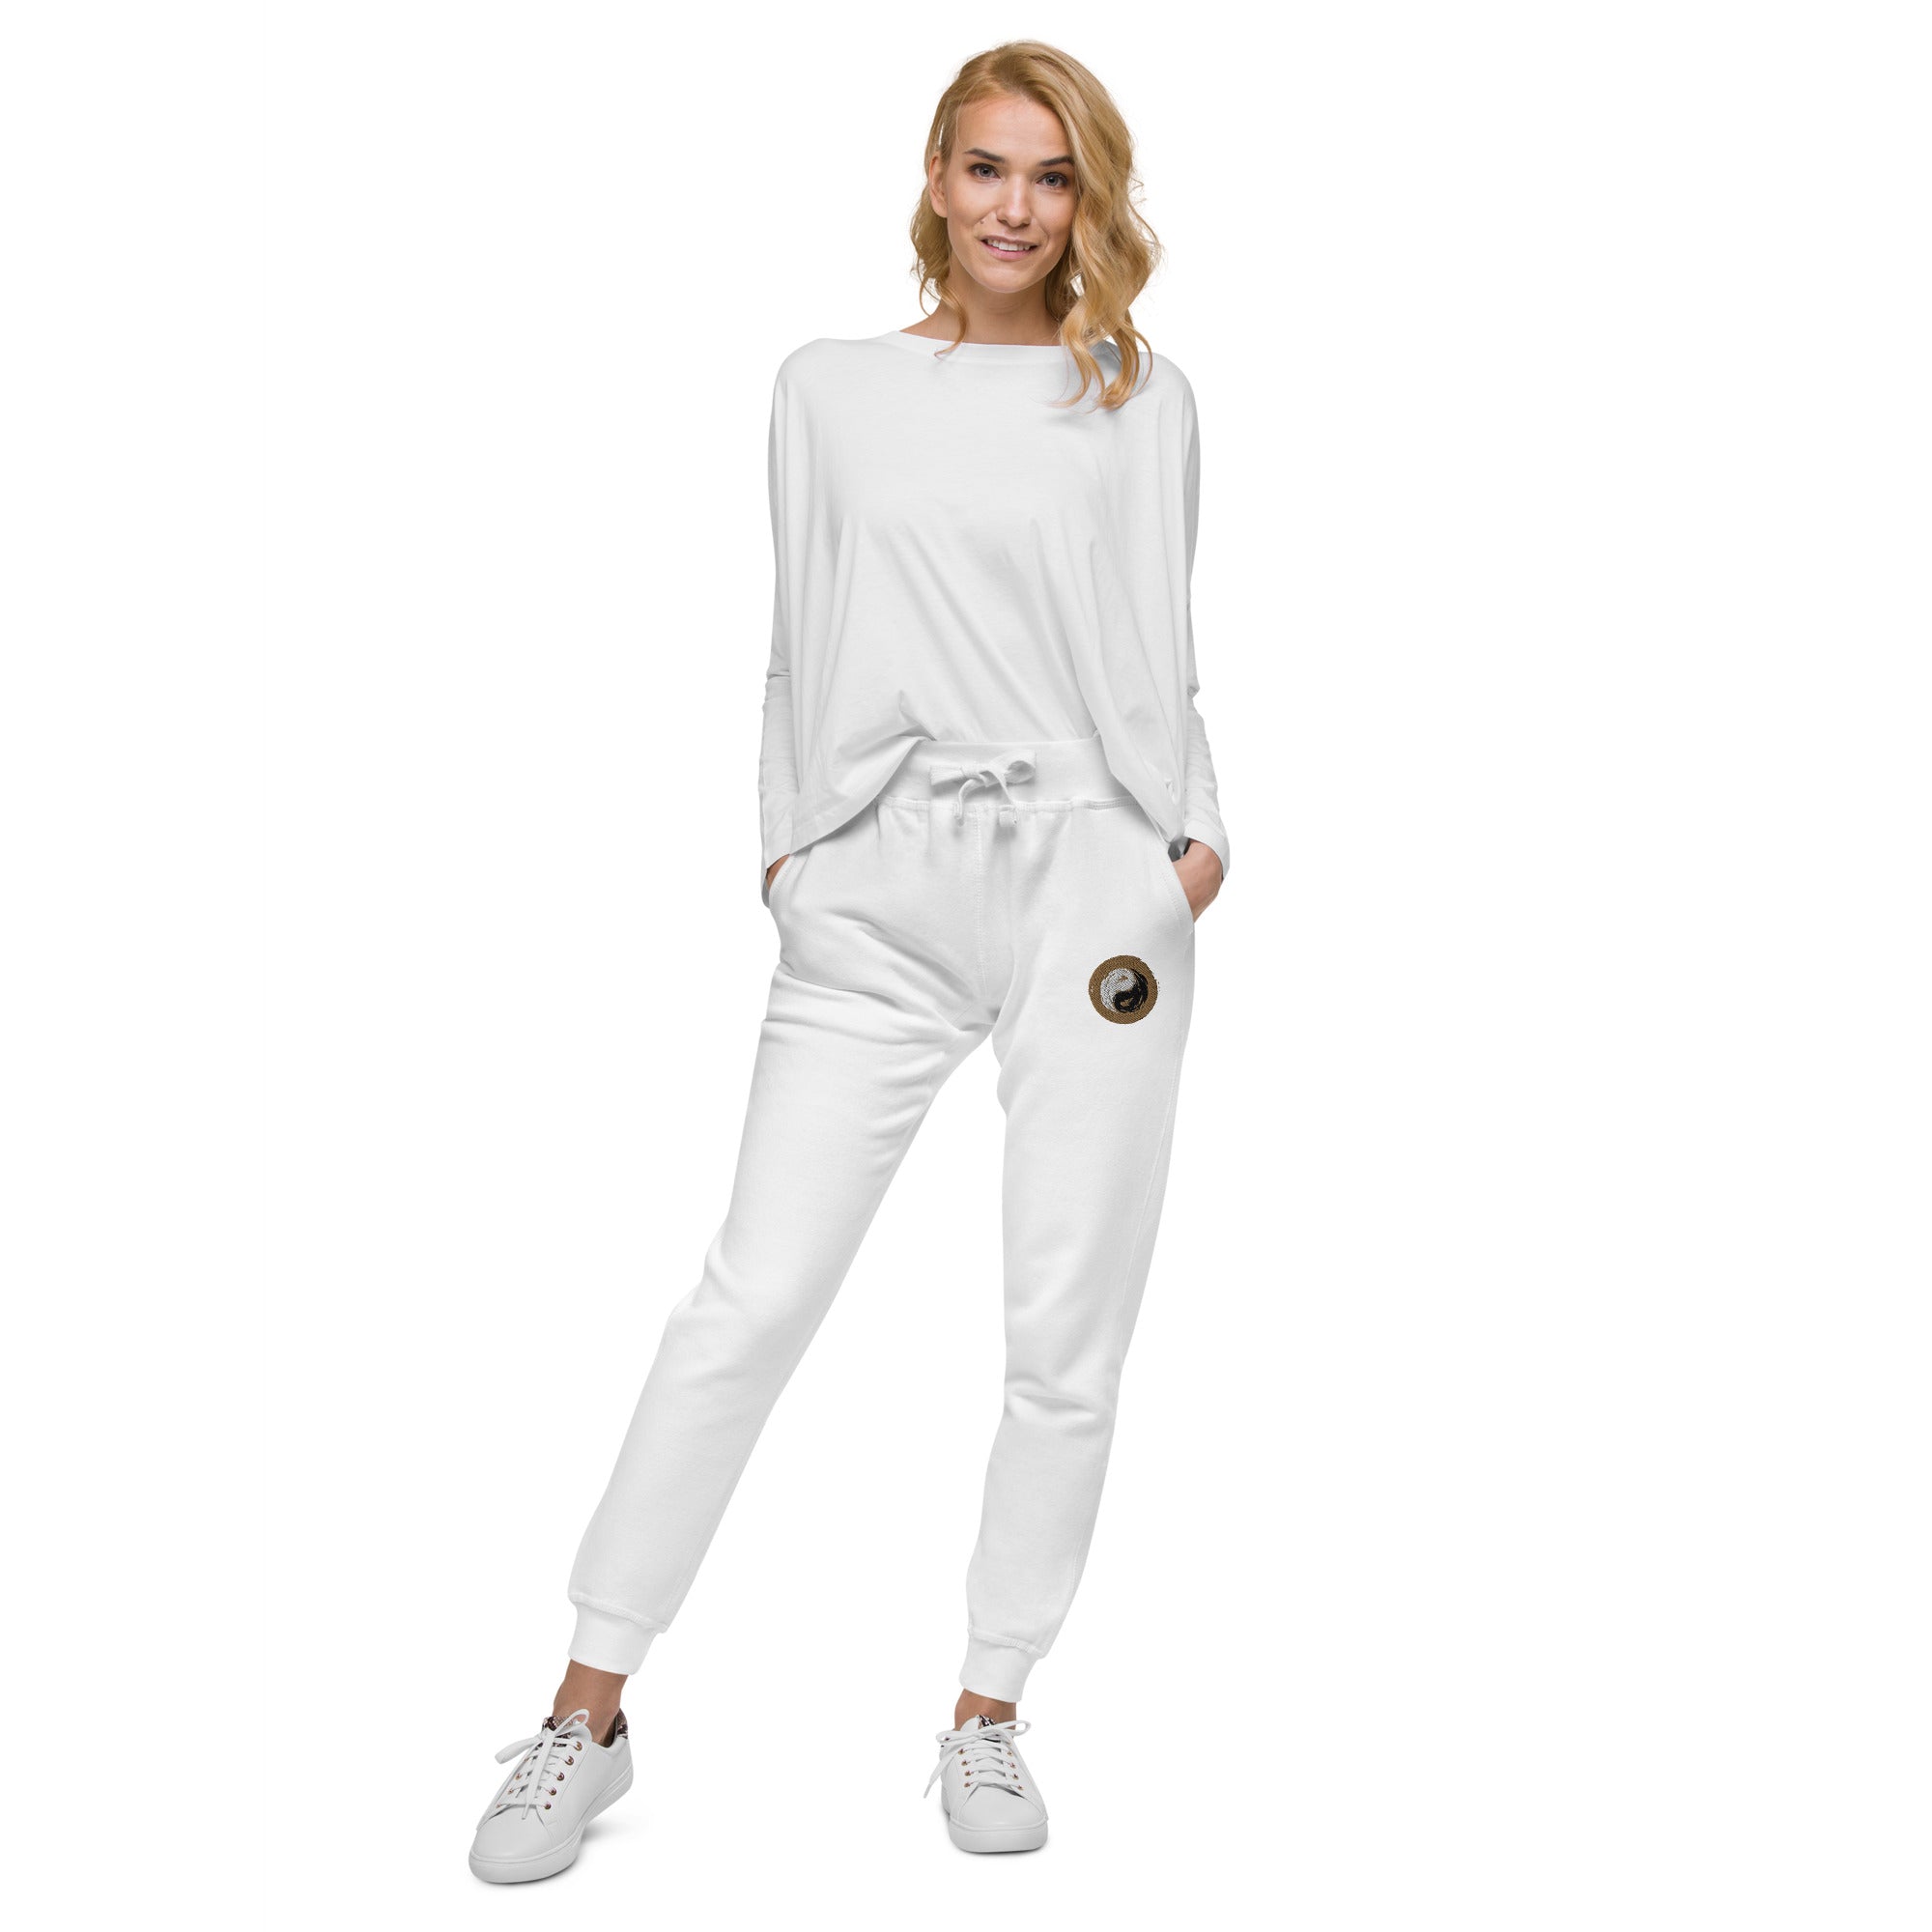 Personal Hour Style - Unisex fleece Cotton Sweatpants for Yoga and Sports - Personal Hour for Yoga and Meditations 